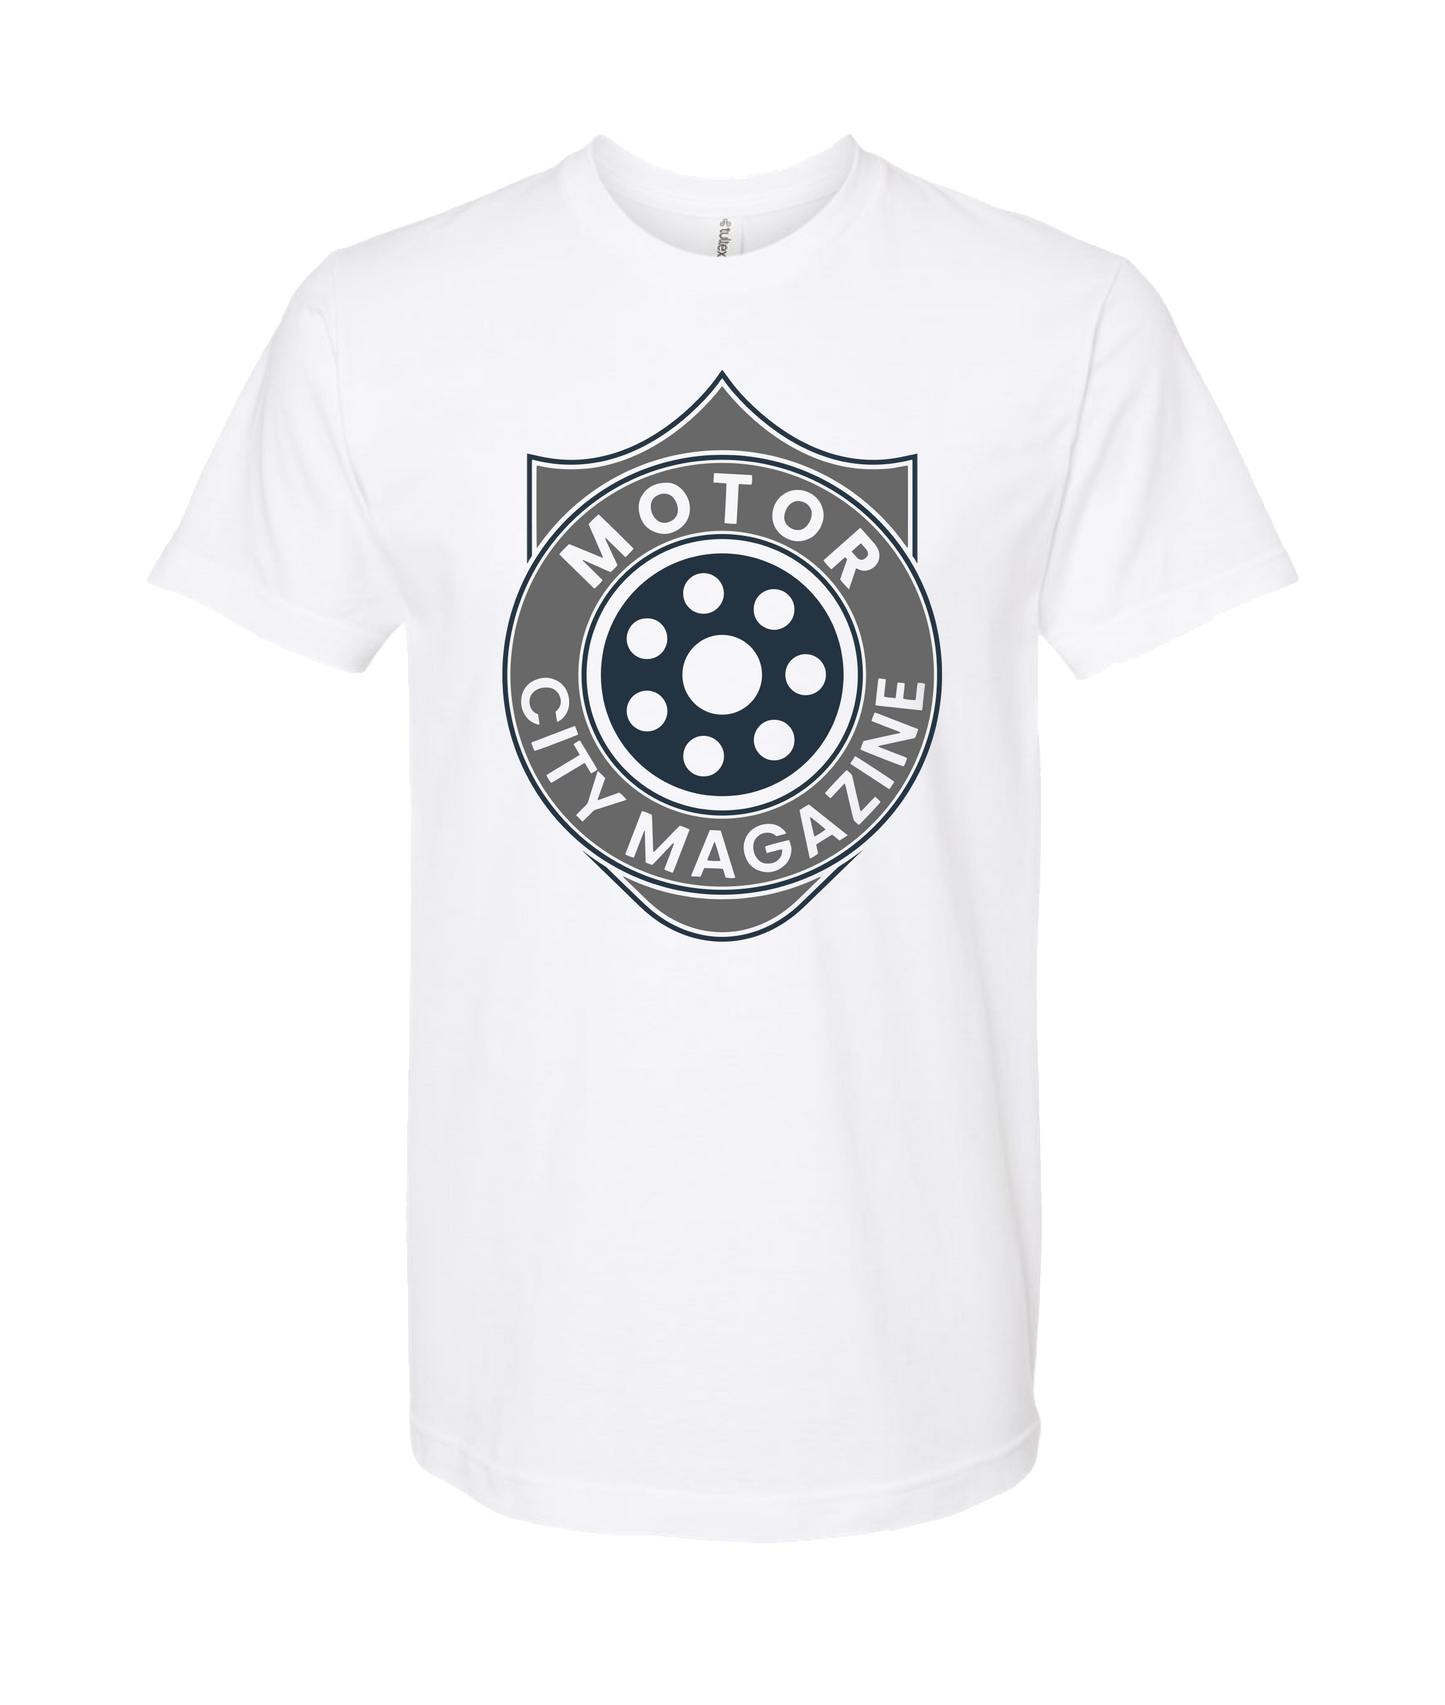 Motor City Mag Merch - LOGO 1 - White T Shirt